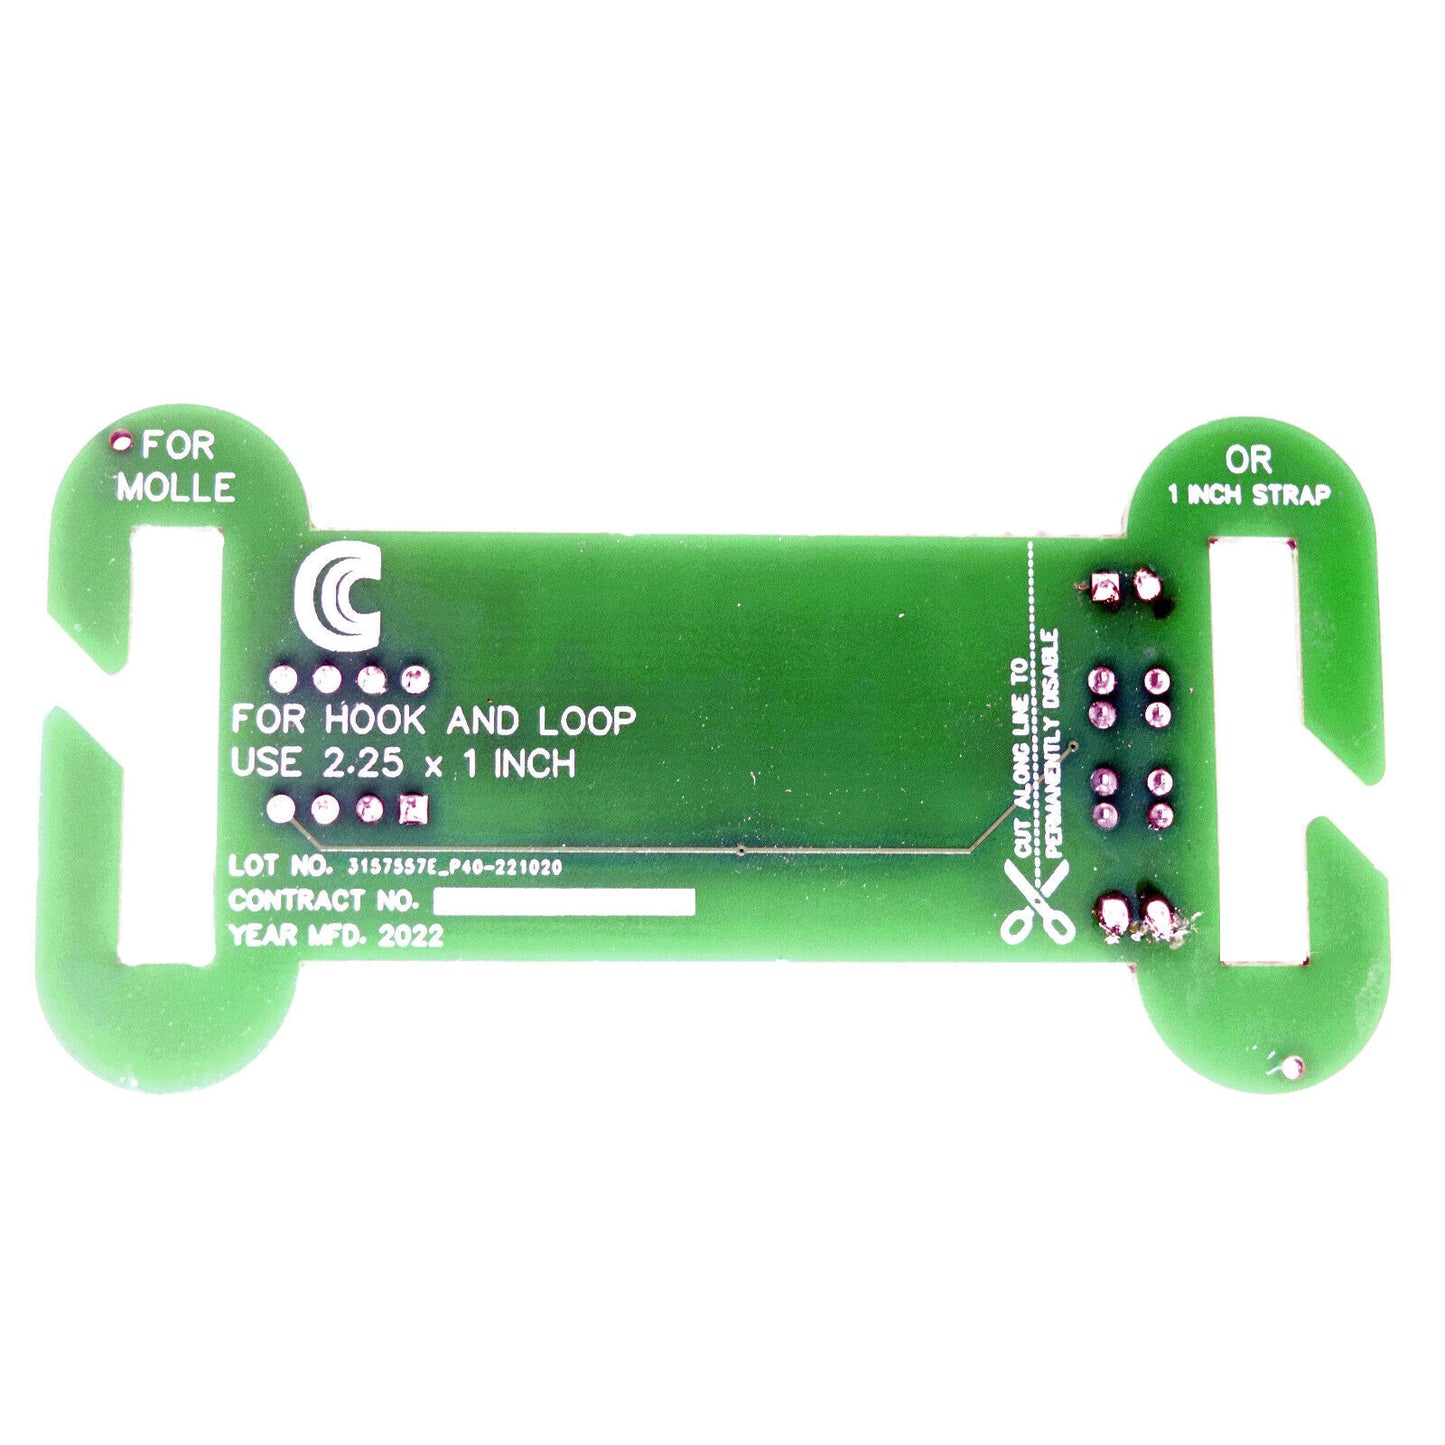 MS-L2-HOG 880nm IR &Green Strobe Marker Distress Device Night Vision Beacon